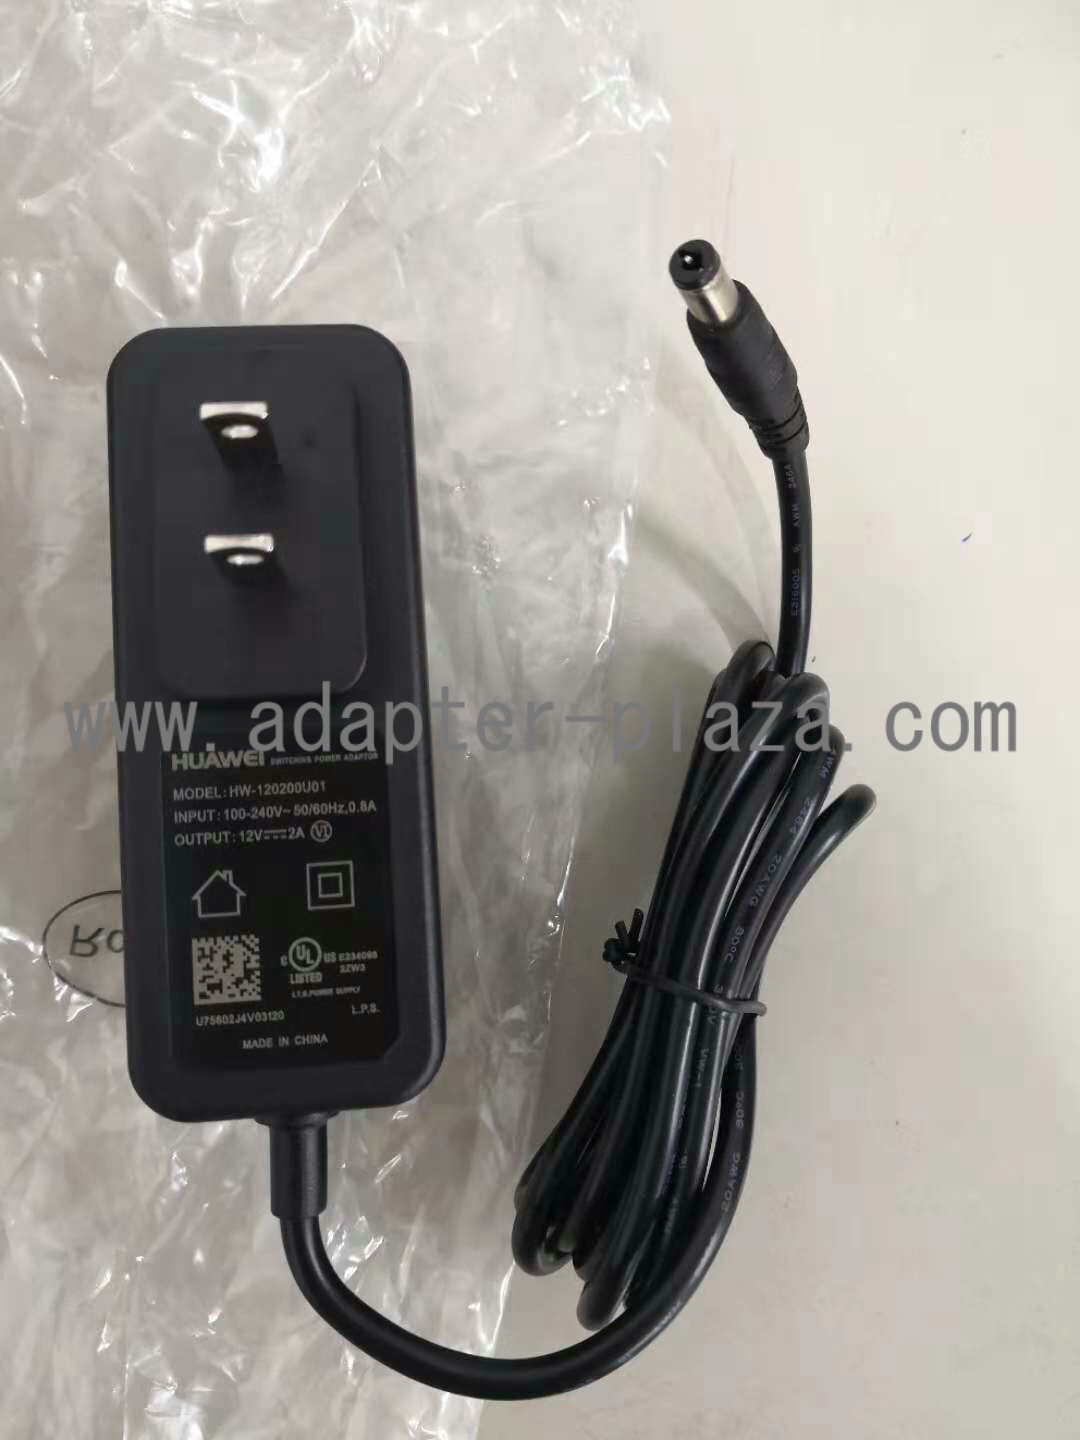 *Brand NEW*HUAWEI HW-120200U01 12V 2A AC Adapter POWER SUPPLY - Click Image to Close